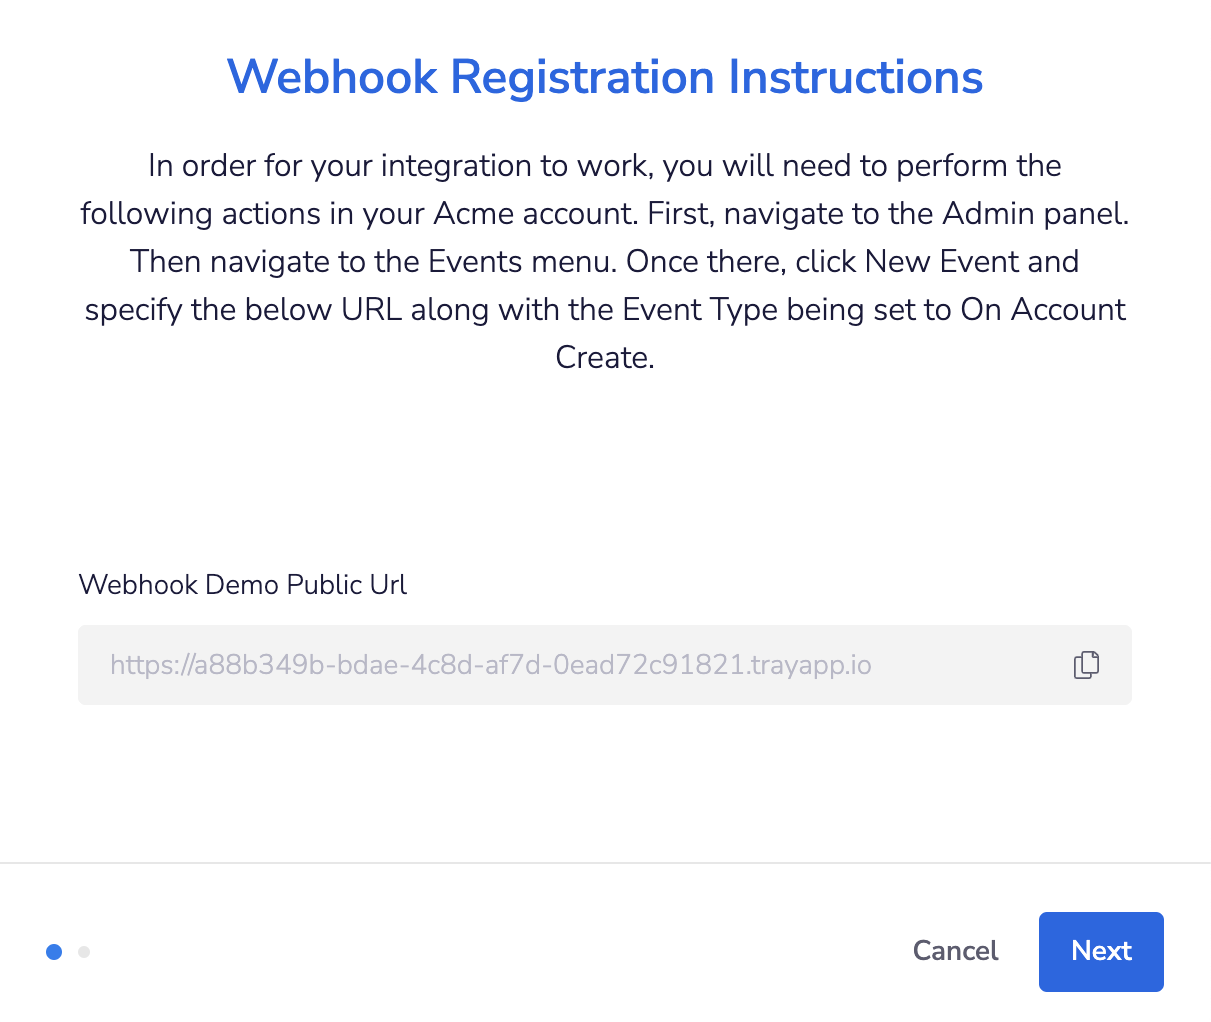 Webhook Registration Instructions for End-Users